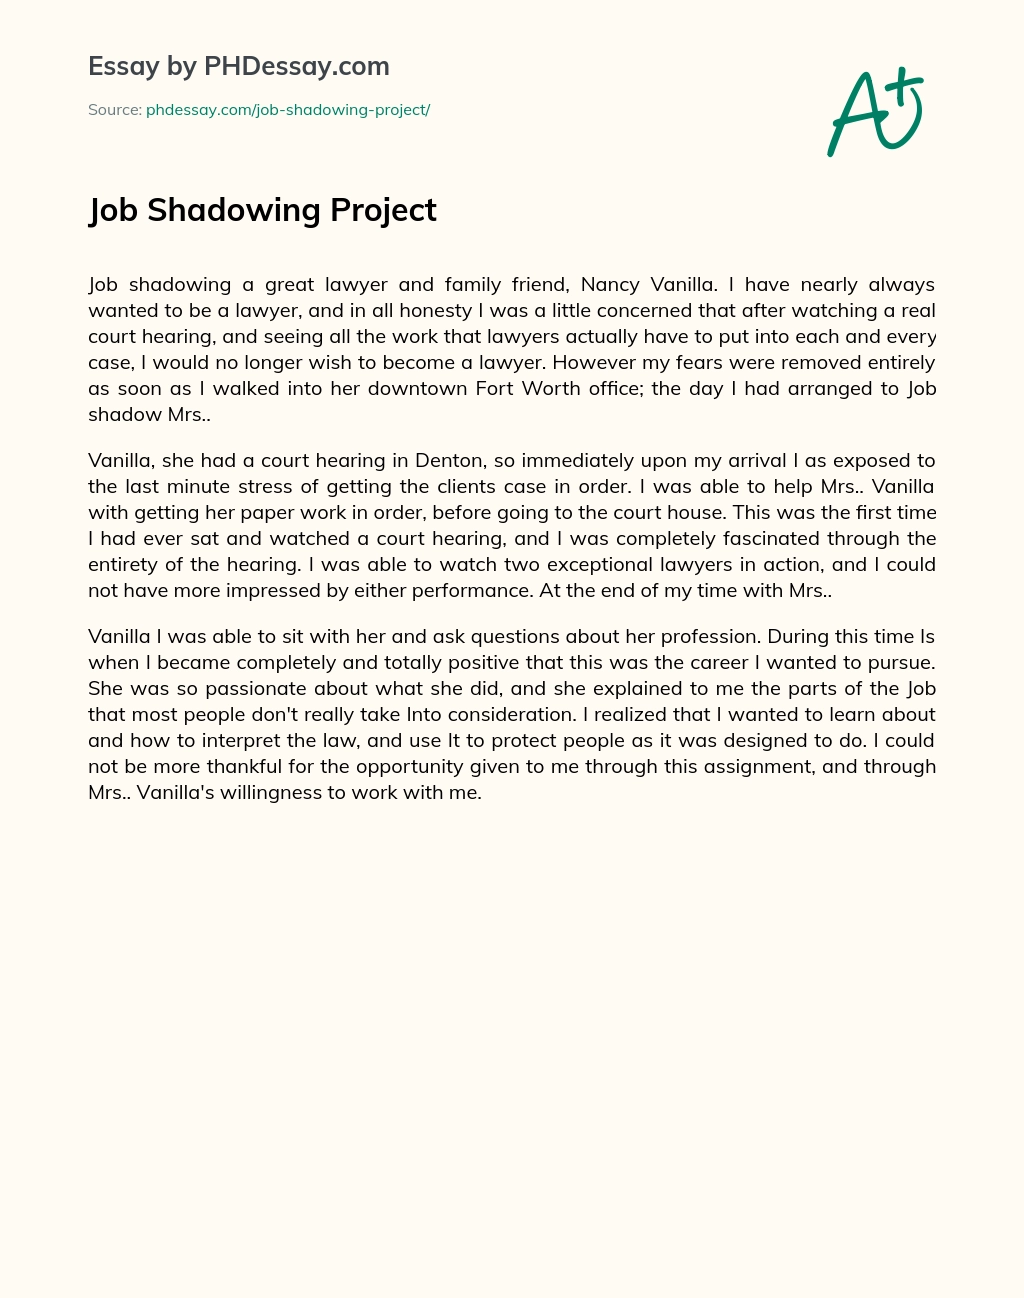 Job Shadowing Project essay